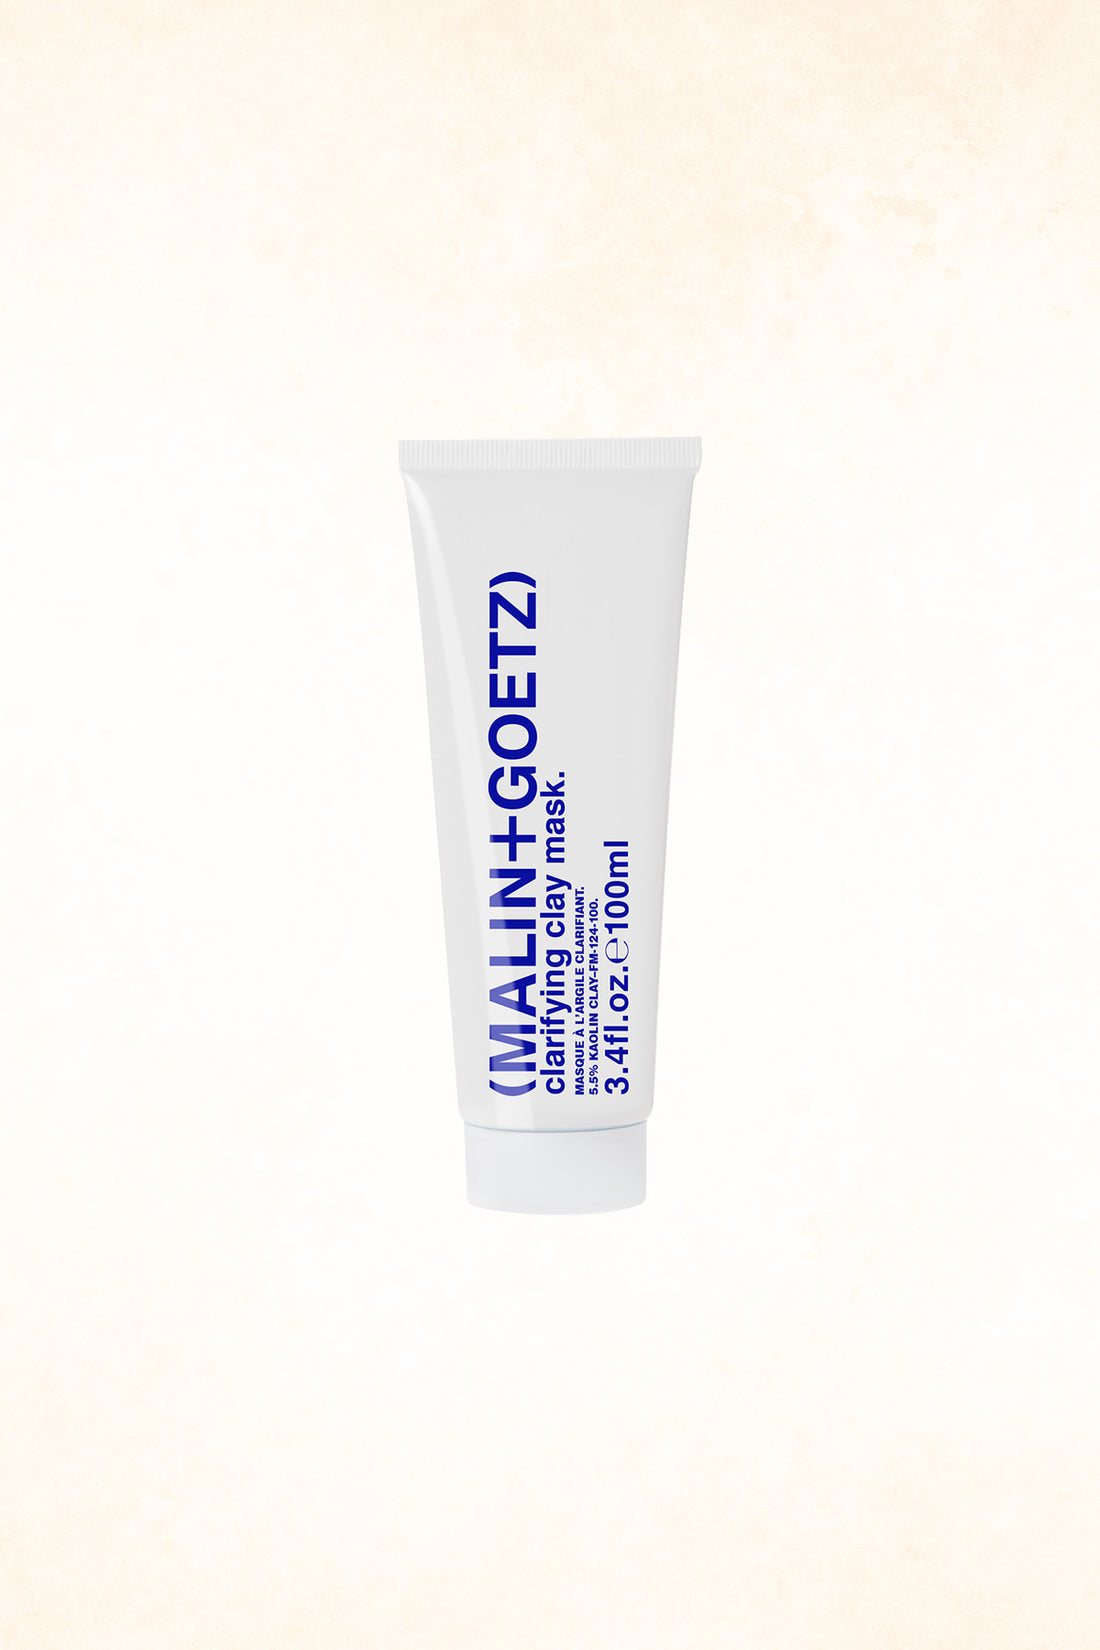 Malin+Goetz – Clarifying Clay Mask 3.4 oz / 100 ml